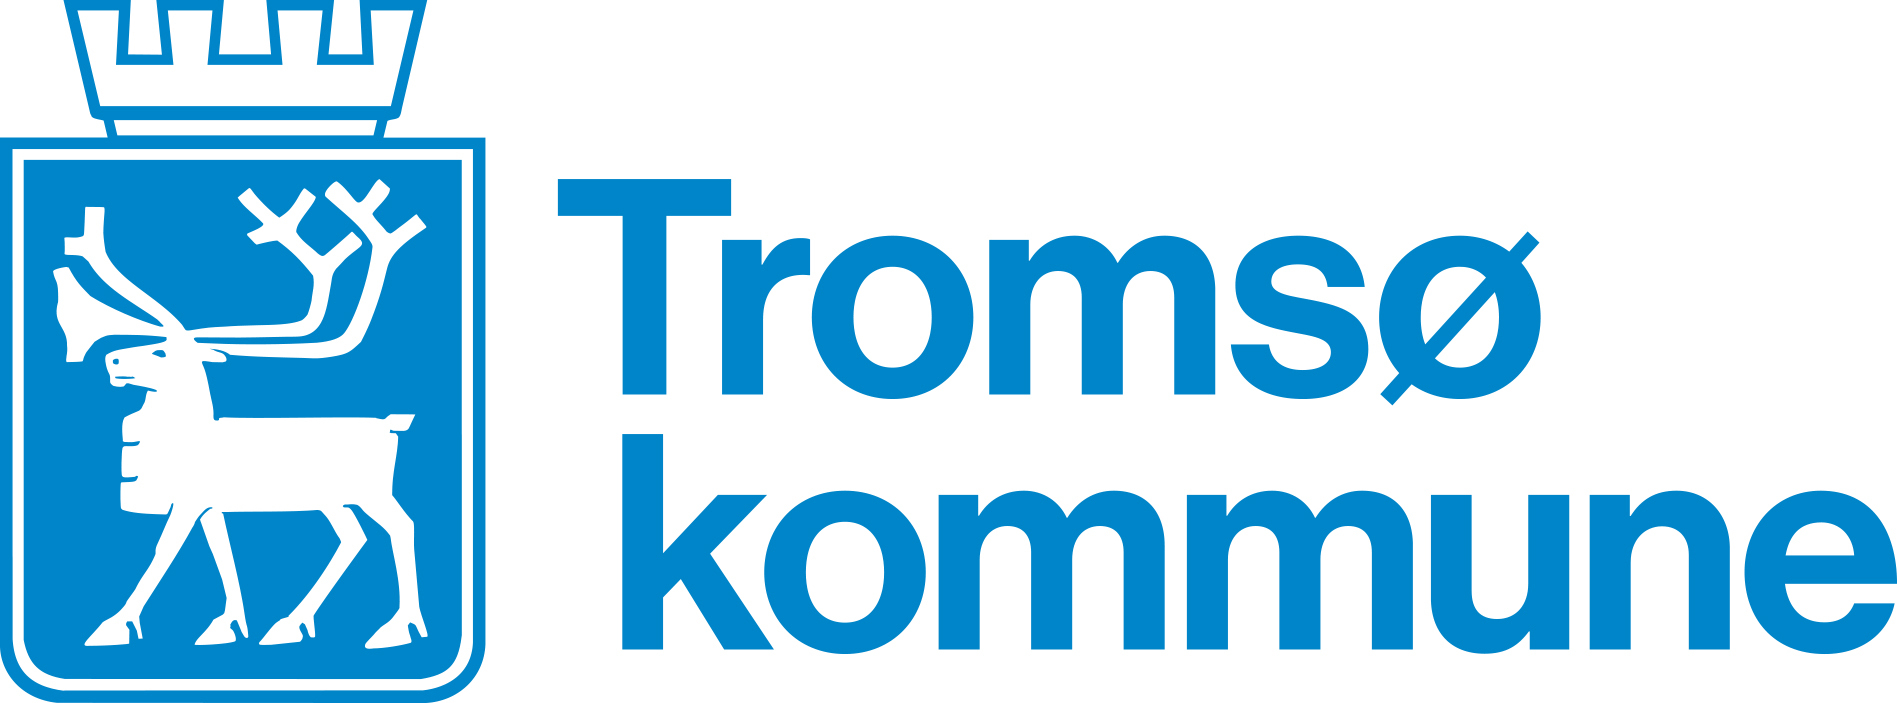 TromsoKommune_HOVEDLOGO_FARGE_rgb 1